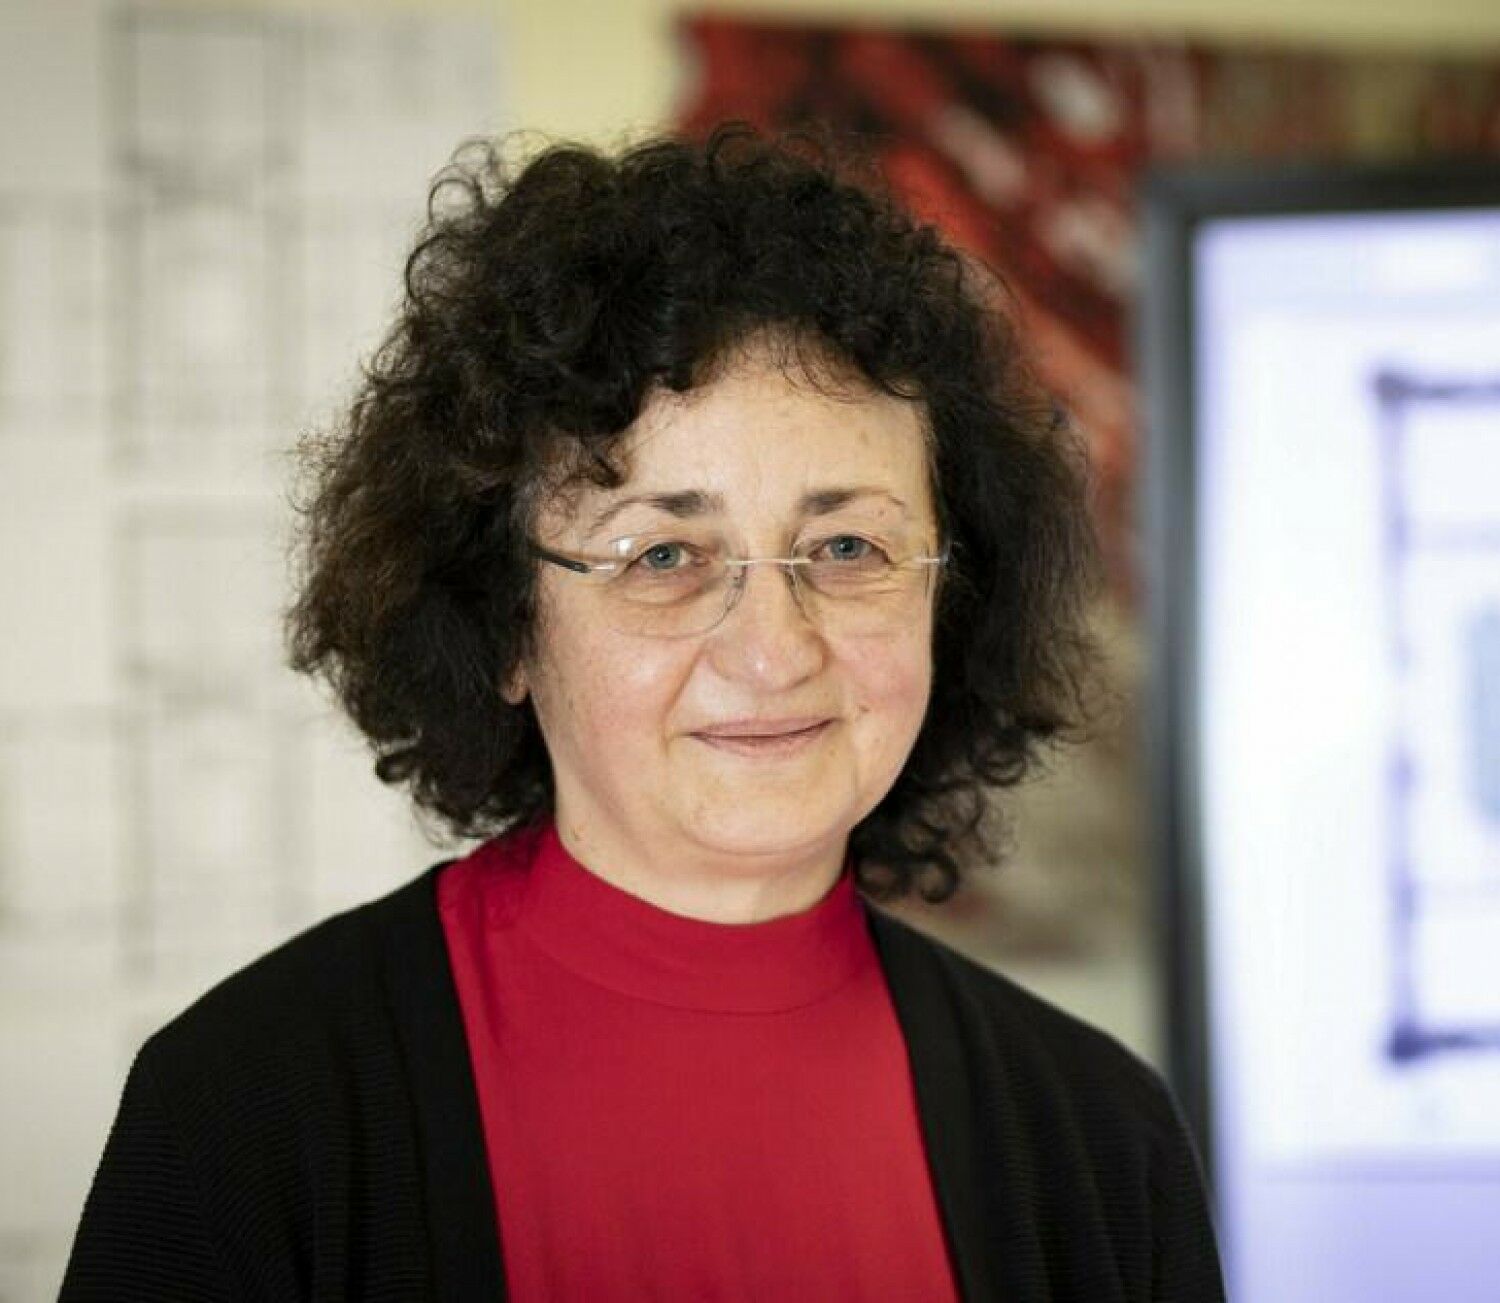 Angela Malz, Library Director of the Chemnitz University Library